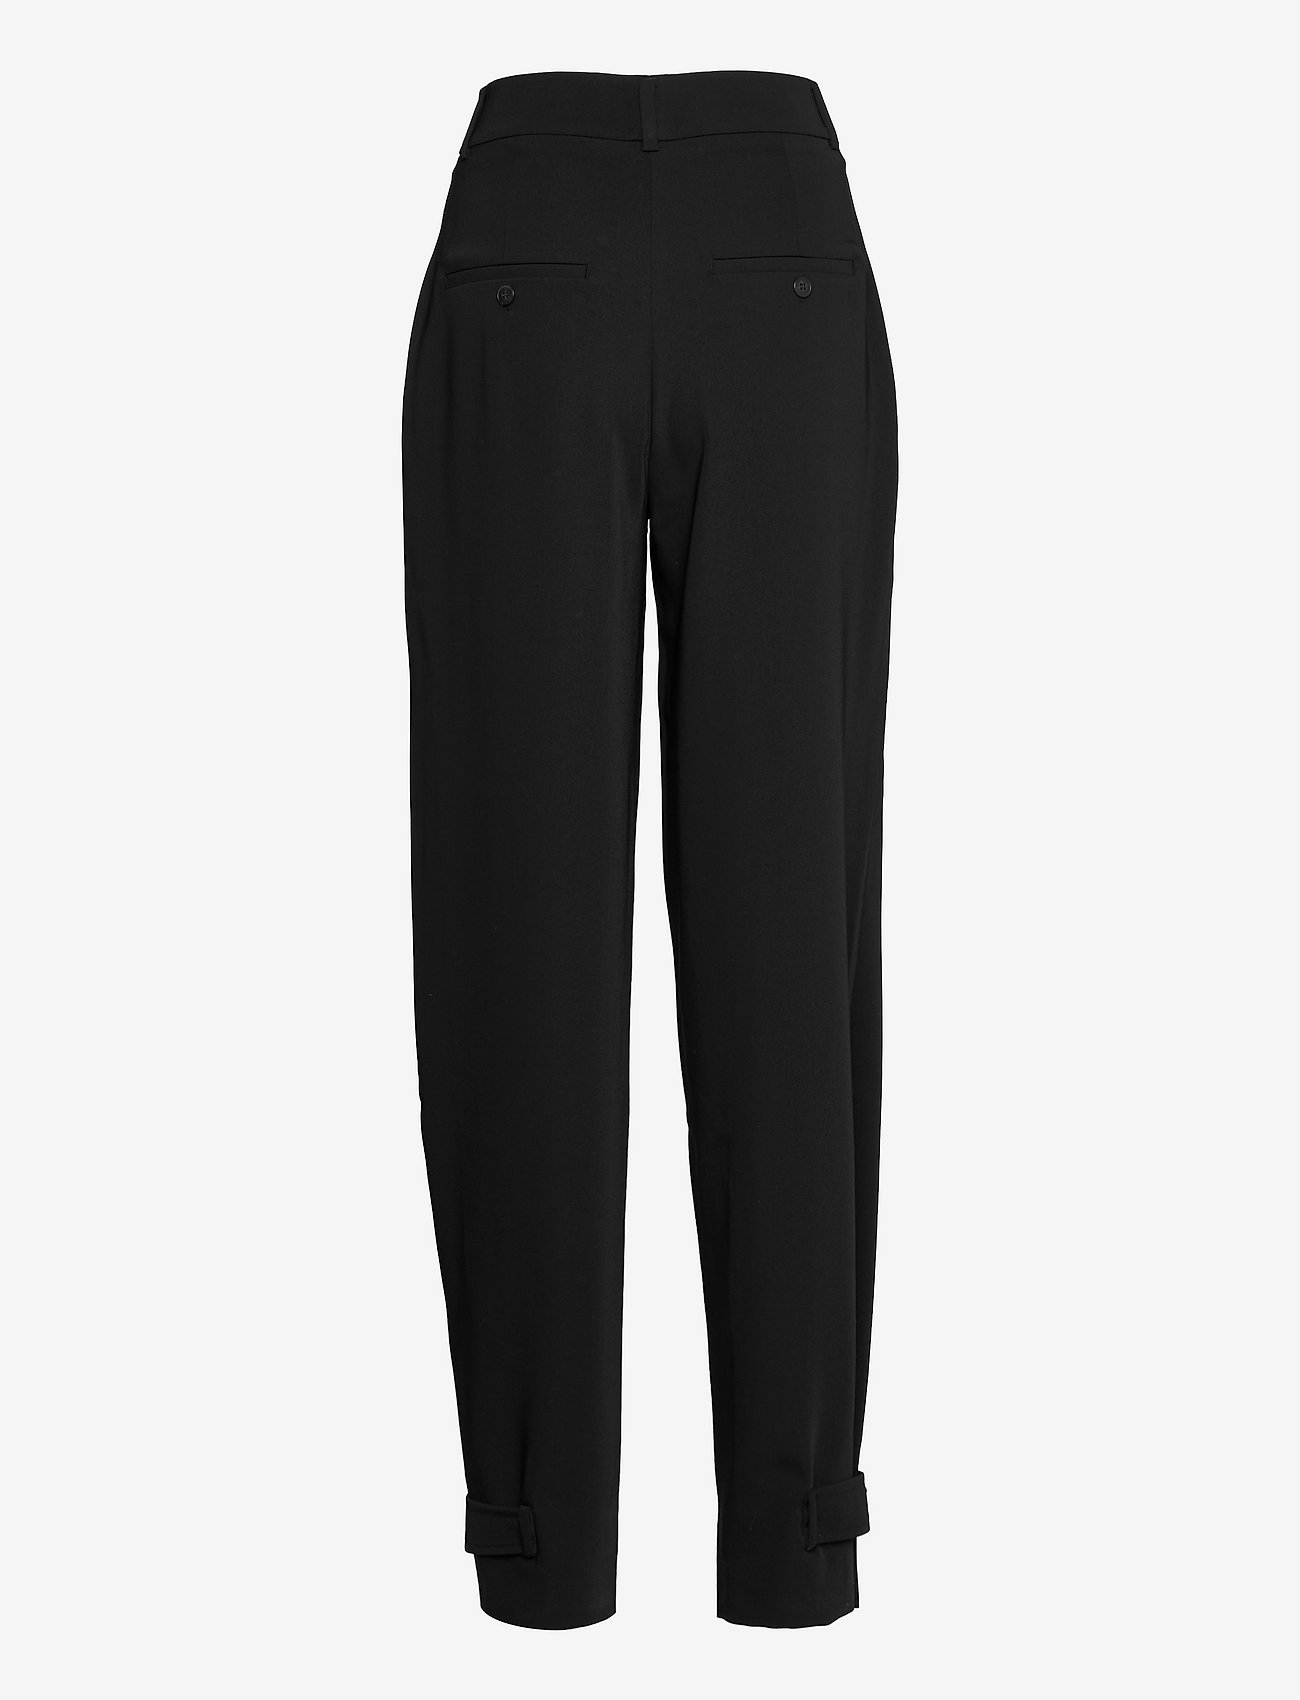 FIVEUNITS - Ellie Bond 576 - straight leg trousers - black - 1